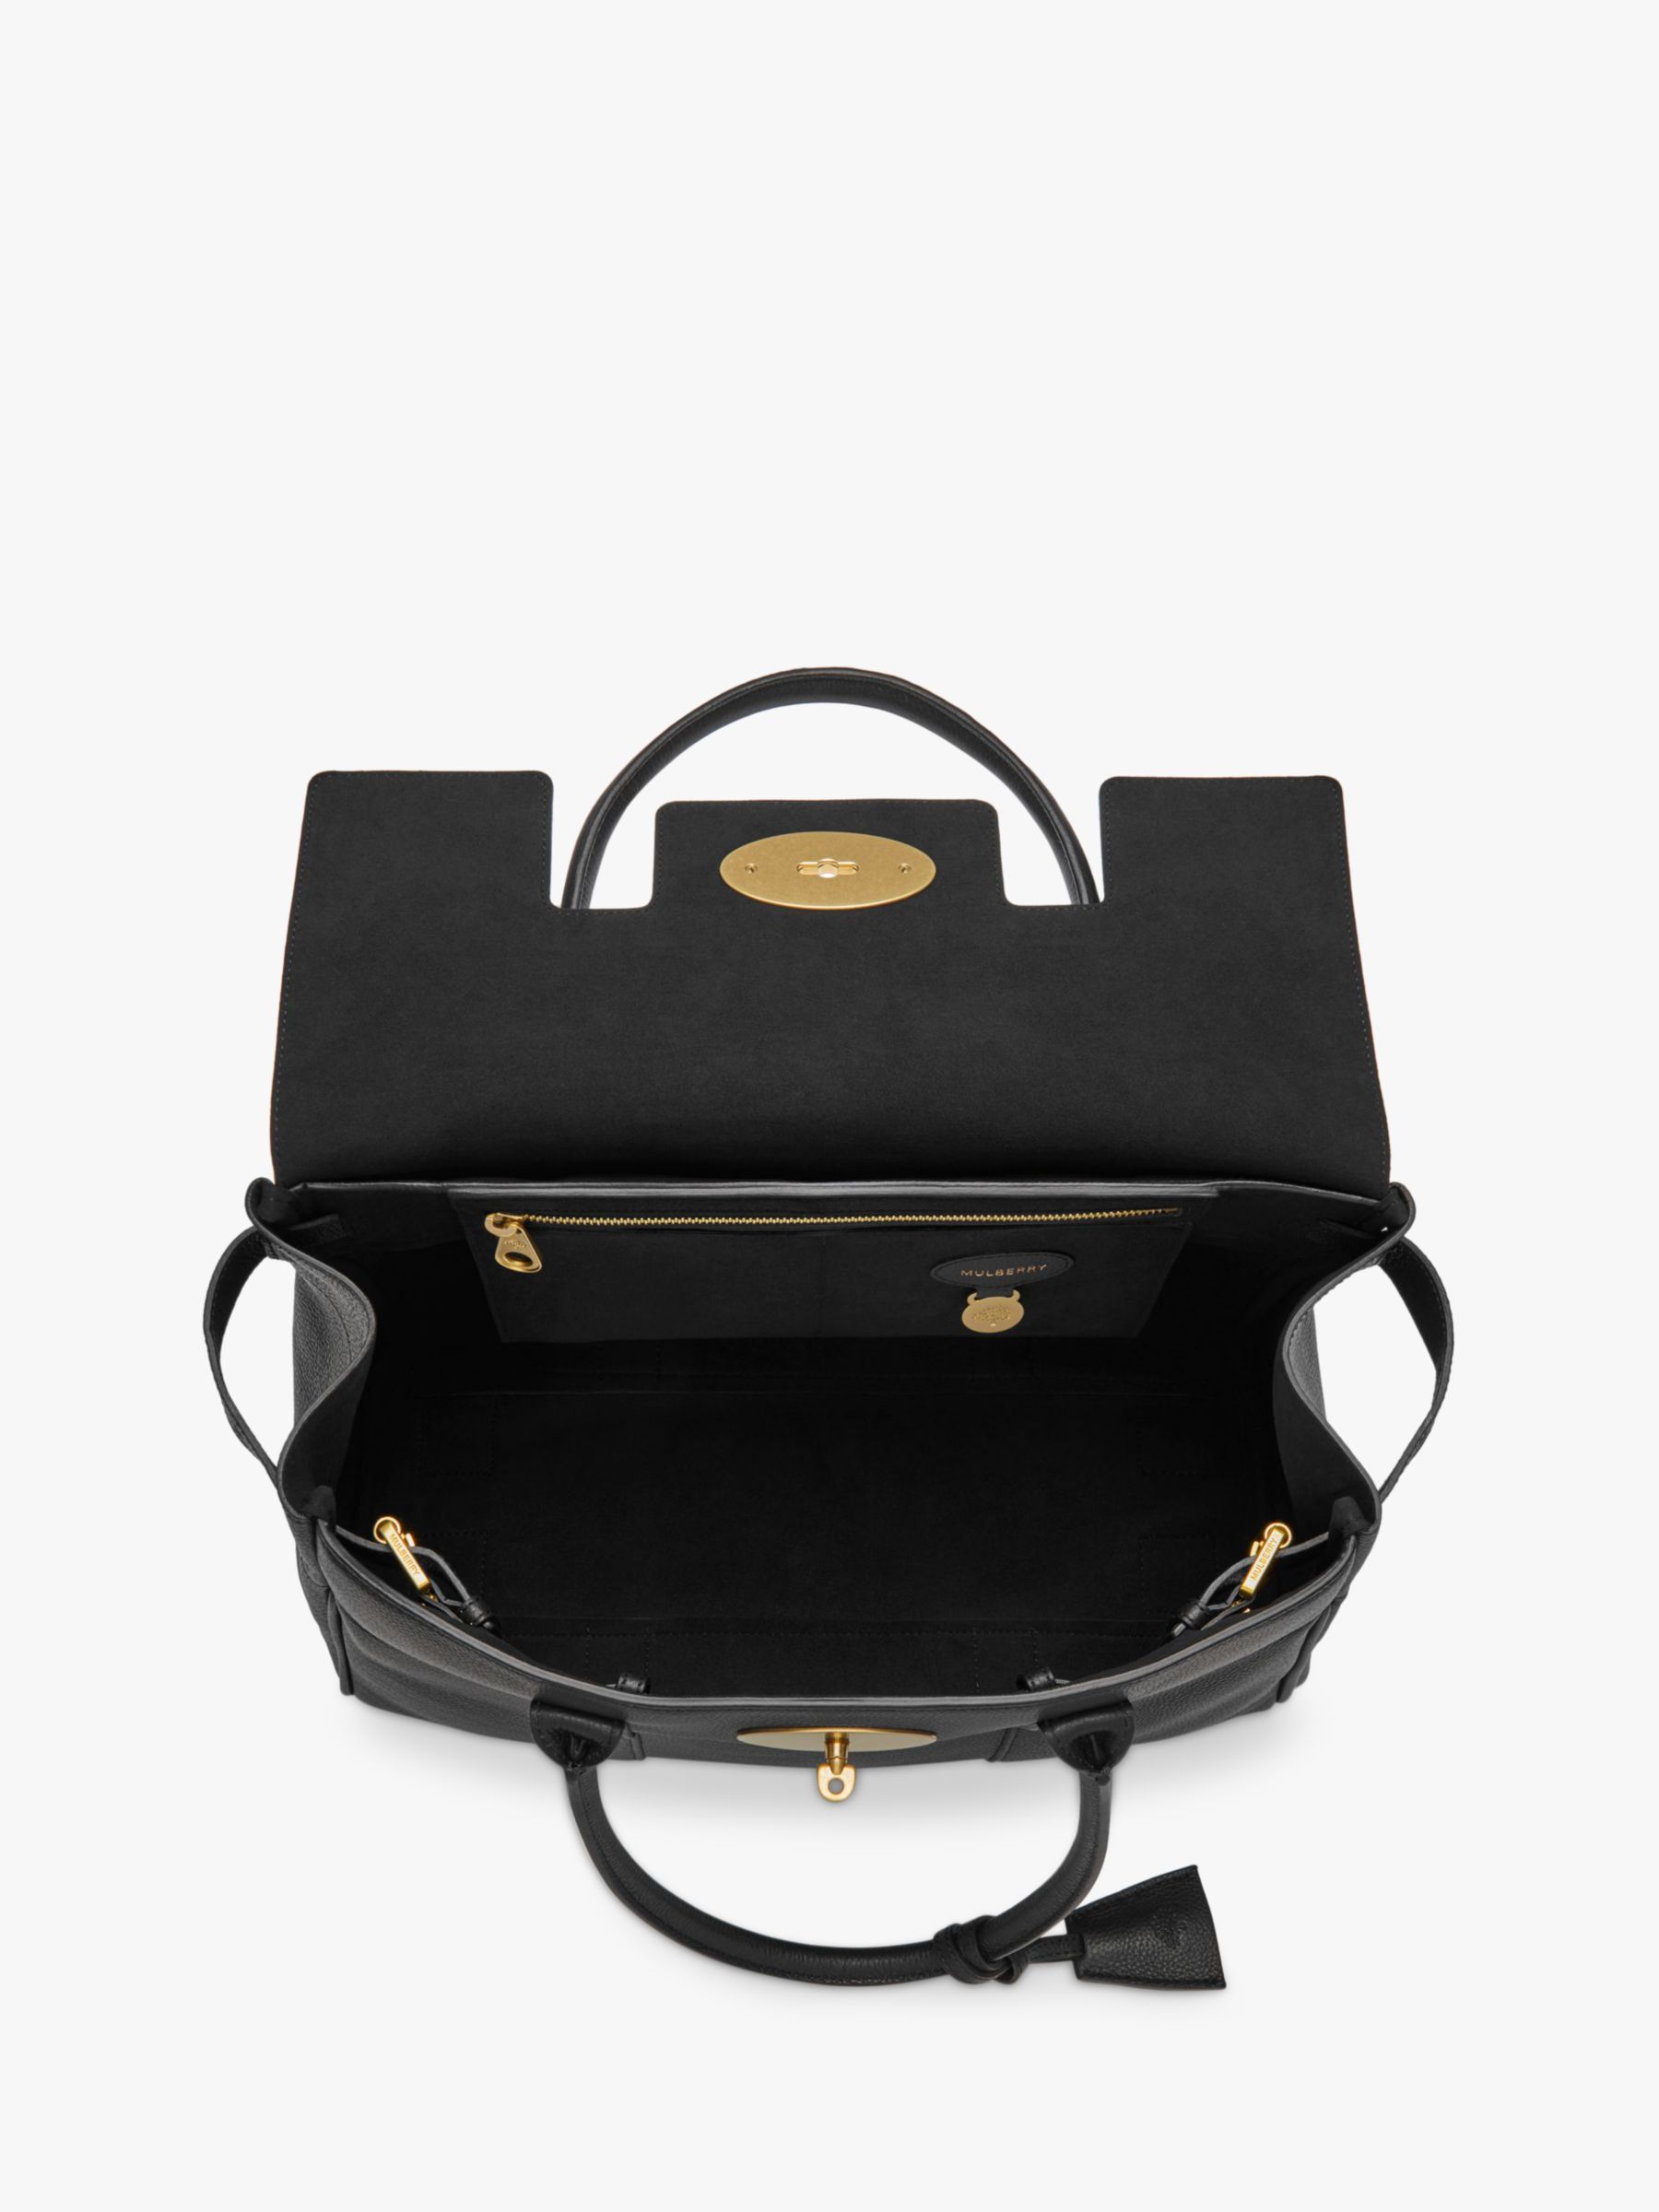 Mulberry Bayswater Classic Grain Leather Handbag, Black